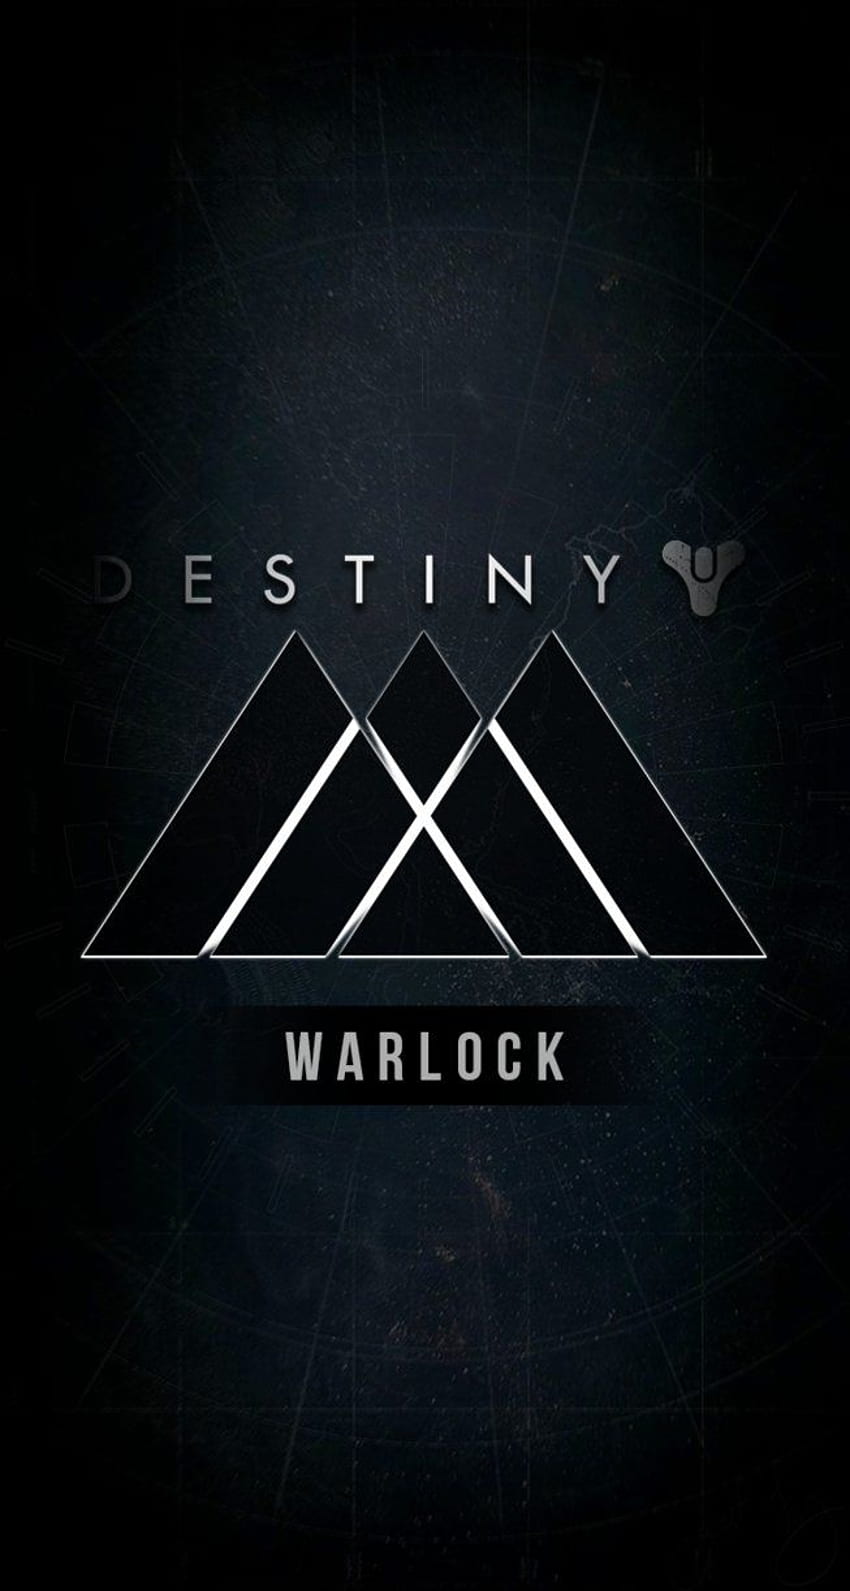 destiny warlock wallpaper iphone